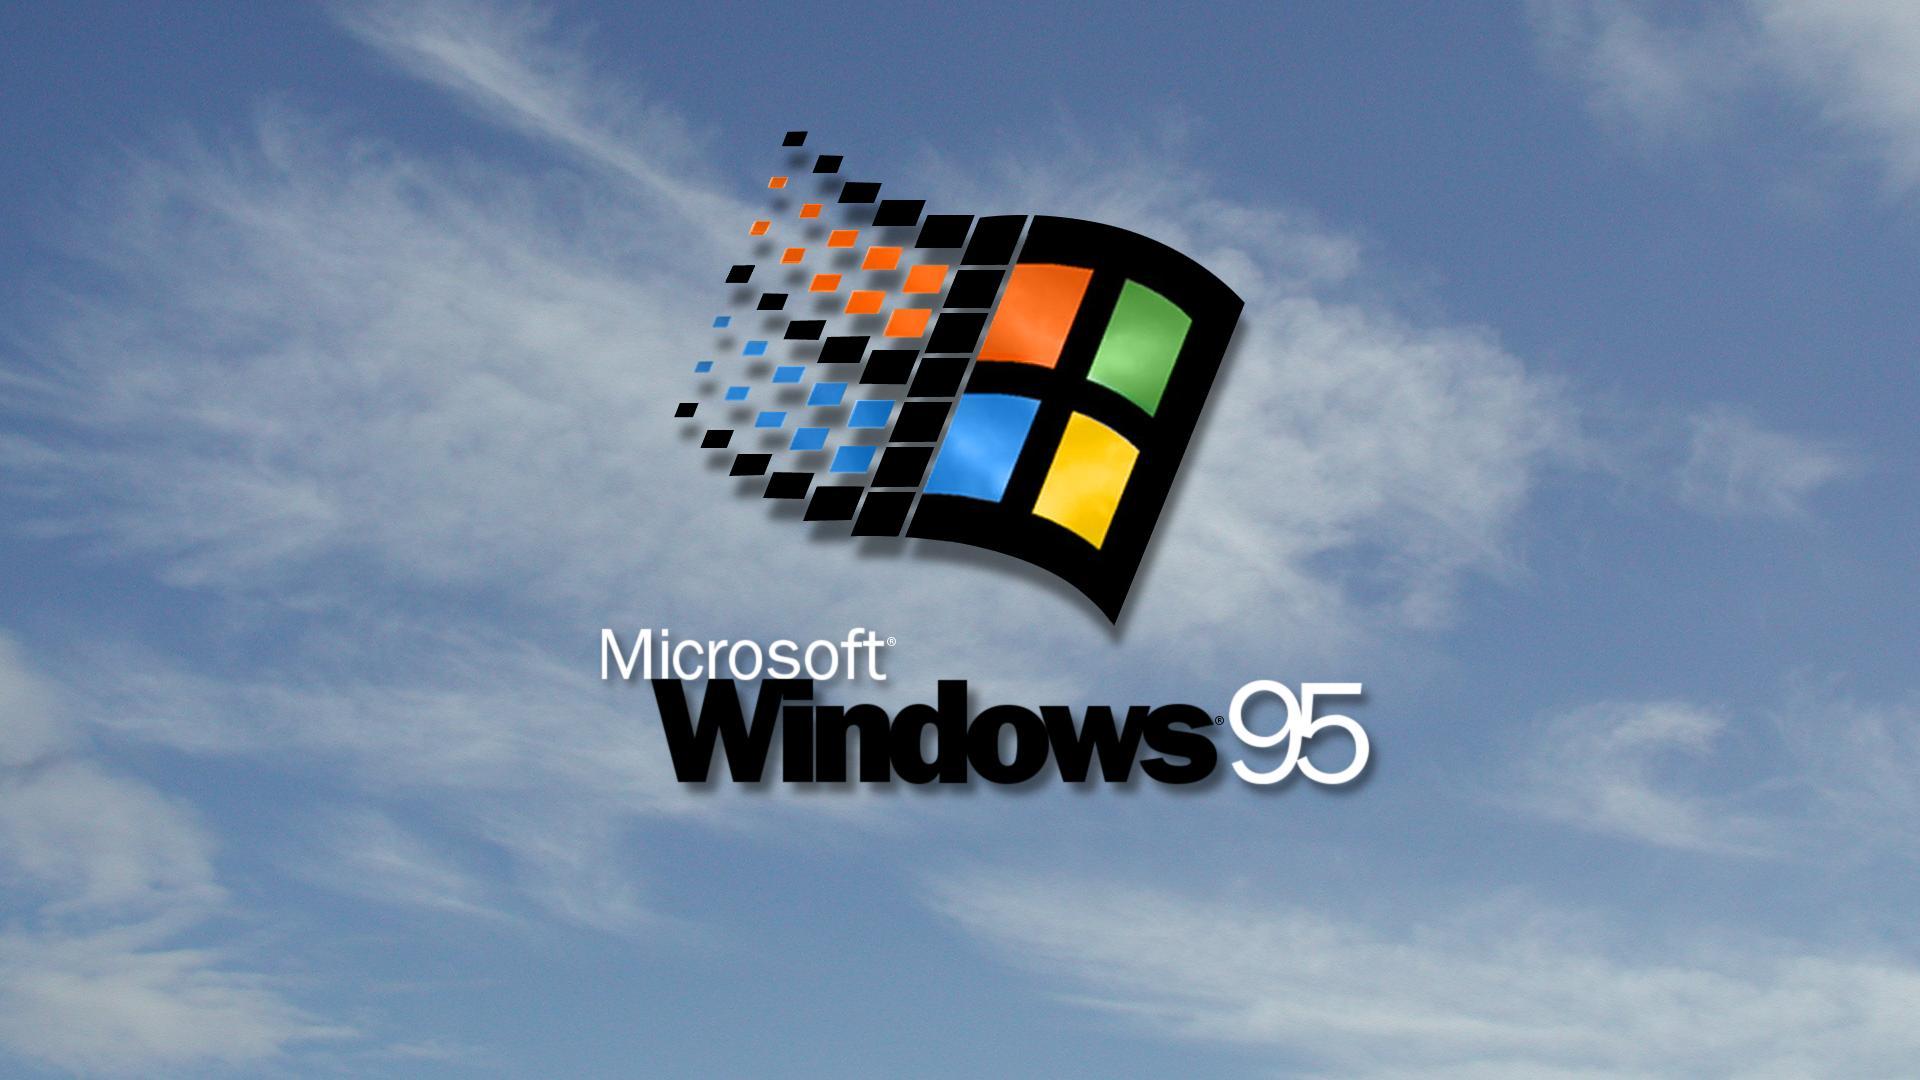 Wallpaper For > Windows 98 Wallpaper 1024x768